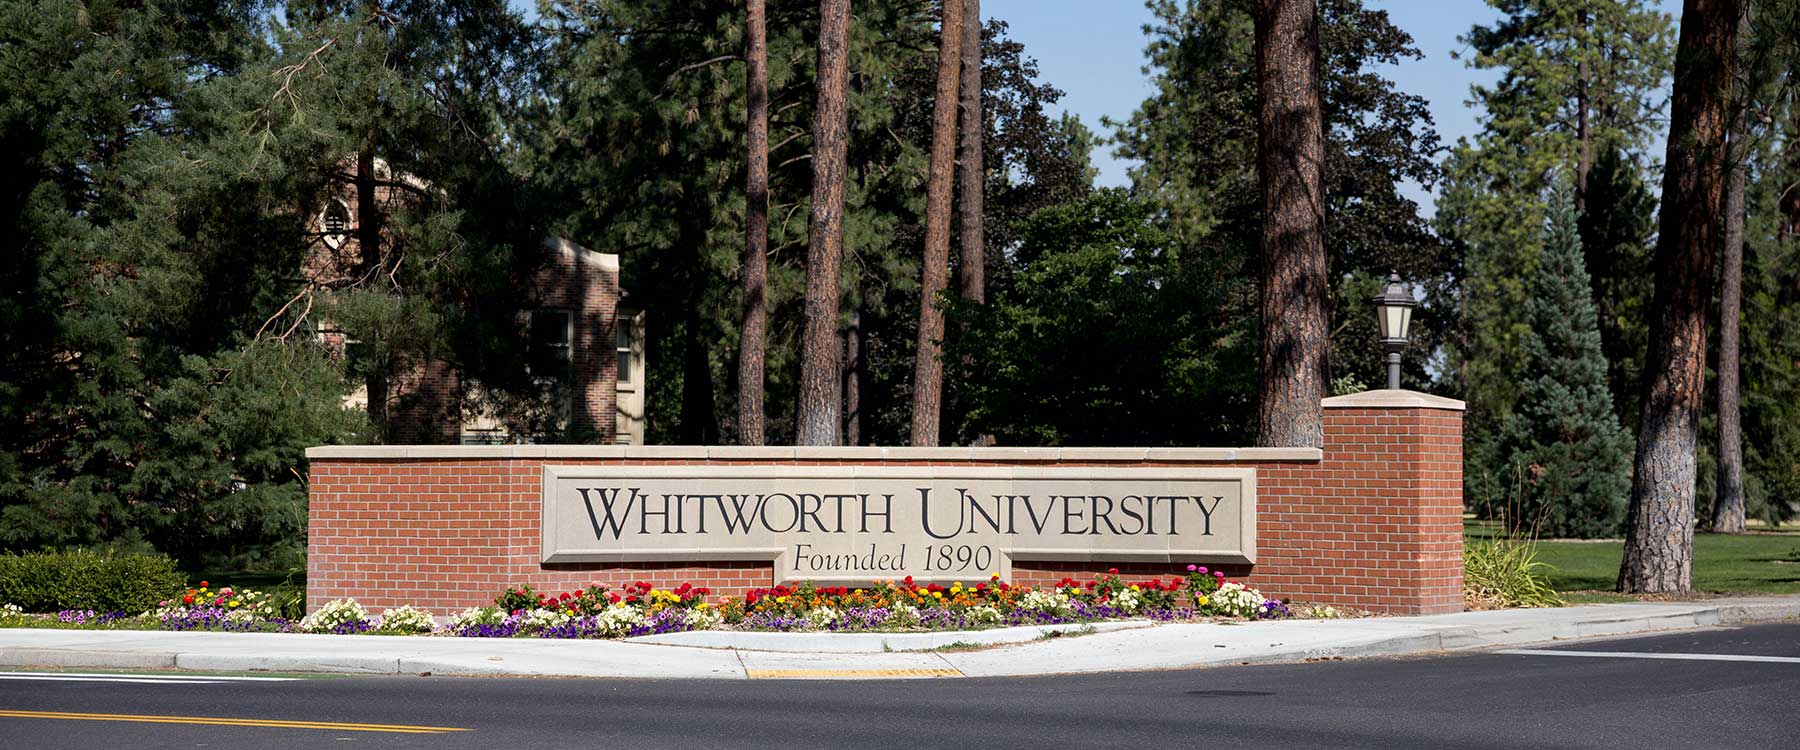 whitworth university visit